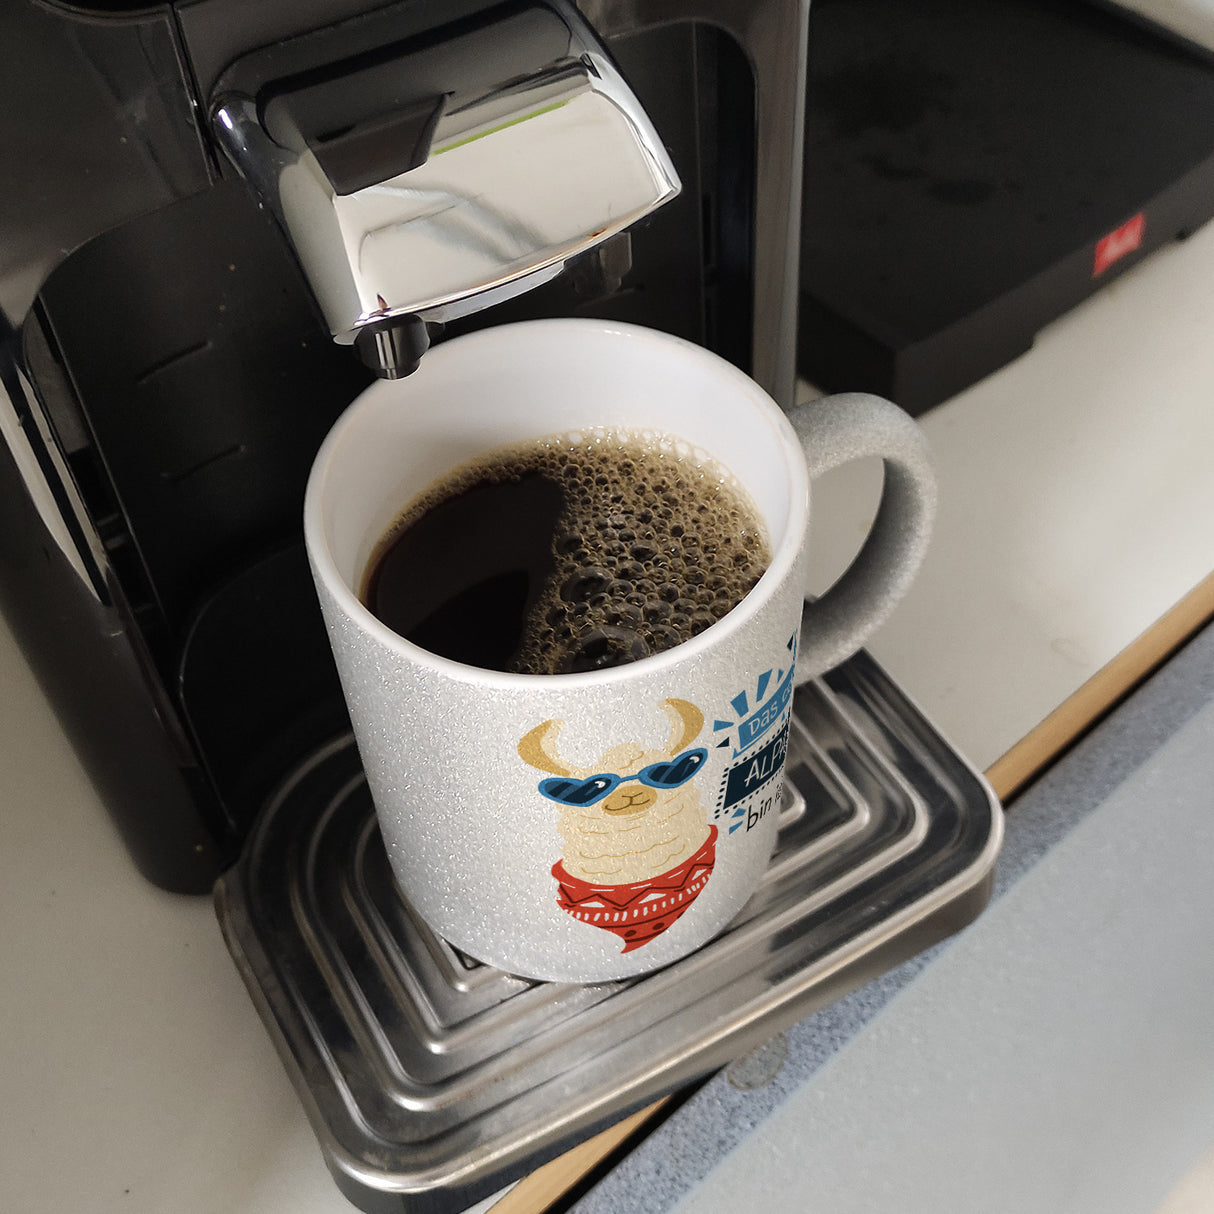 Das coolste Alpaka bin ich Kaffeebecher